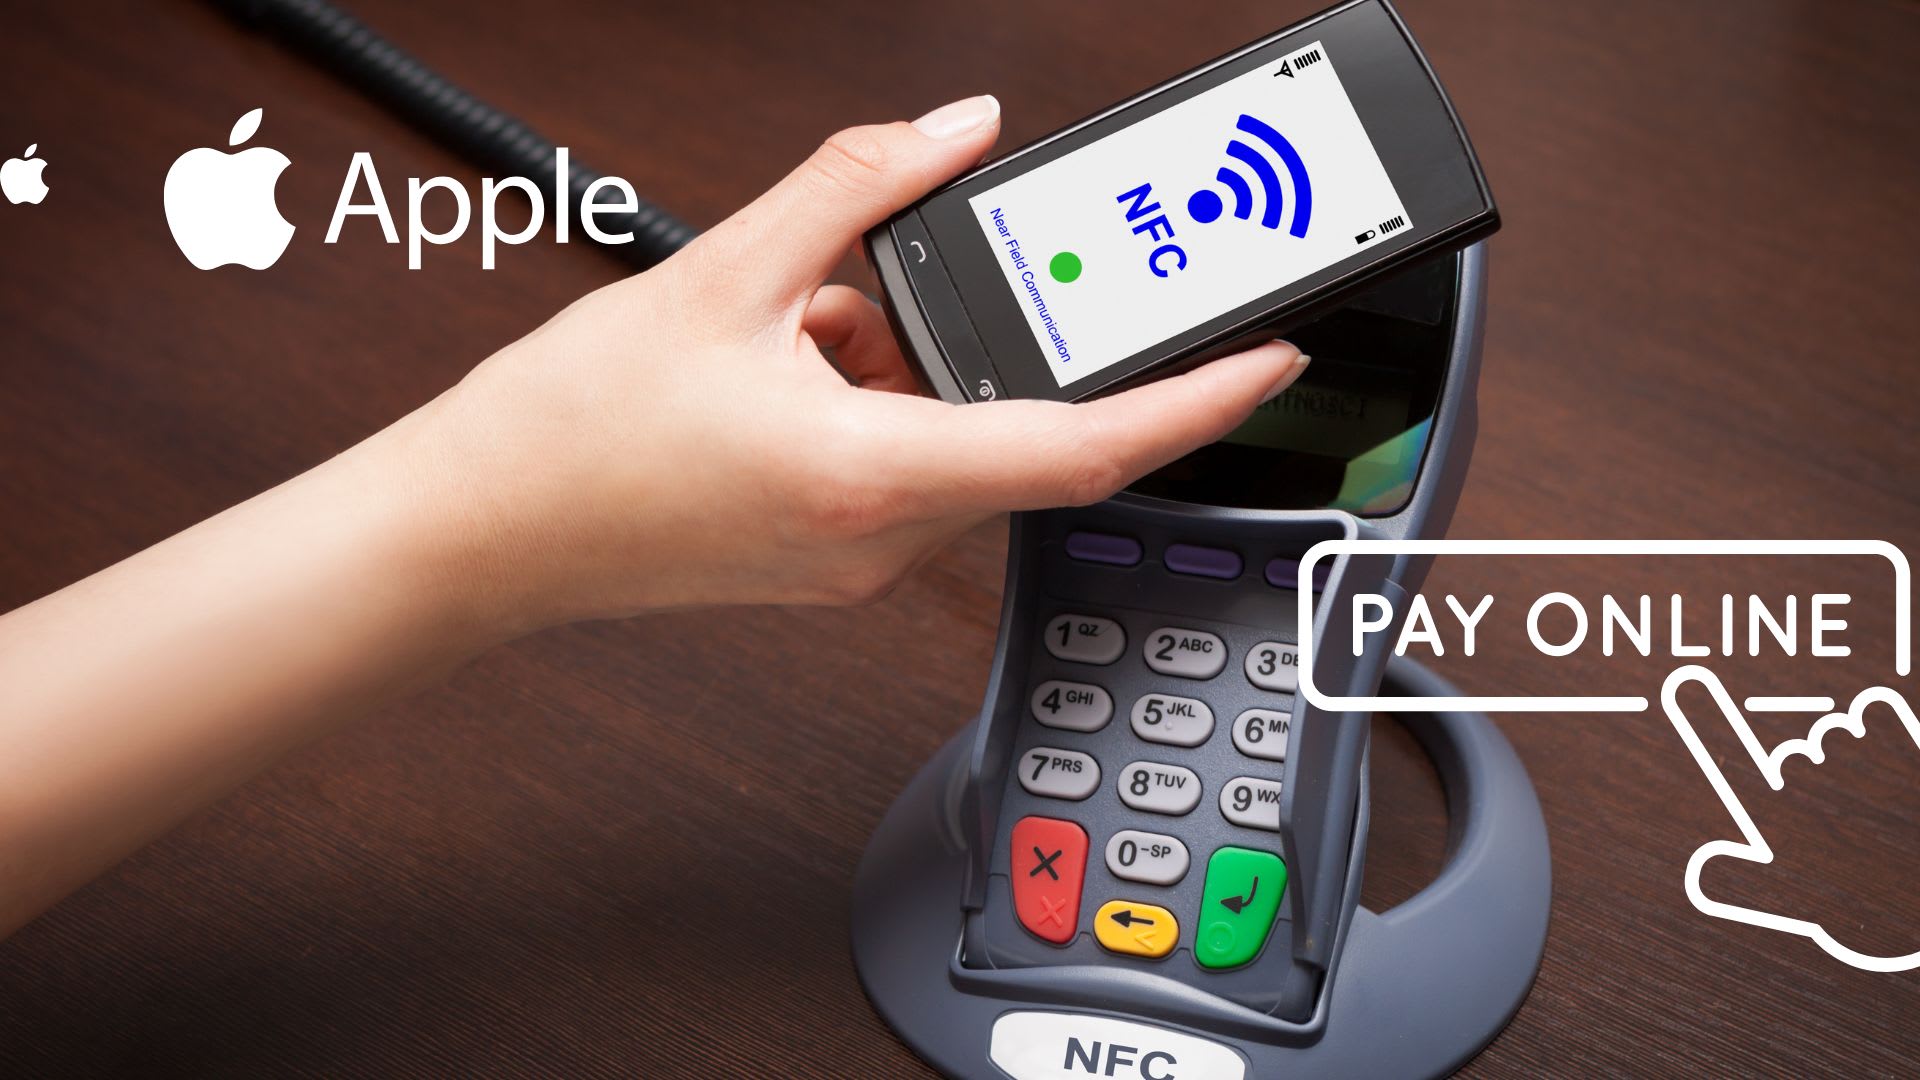 NFC Encoding - We Write NFC Tags for You - Shop NFC